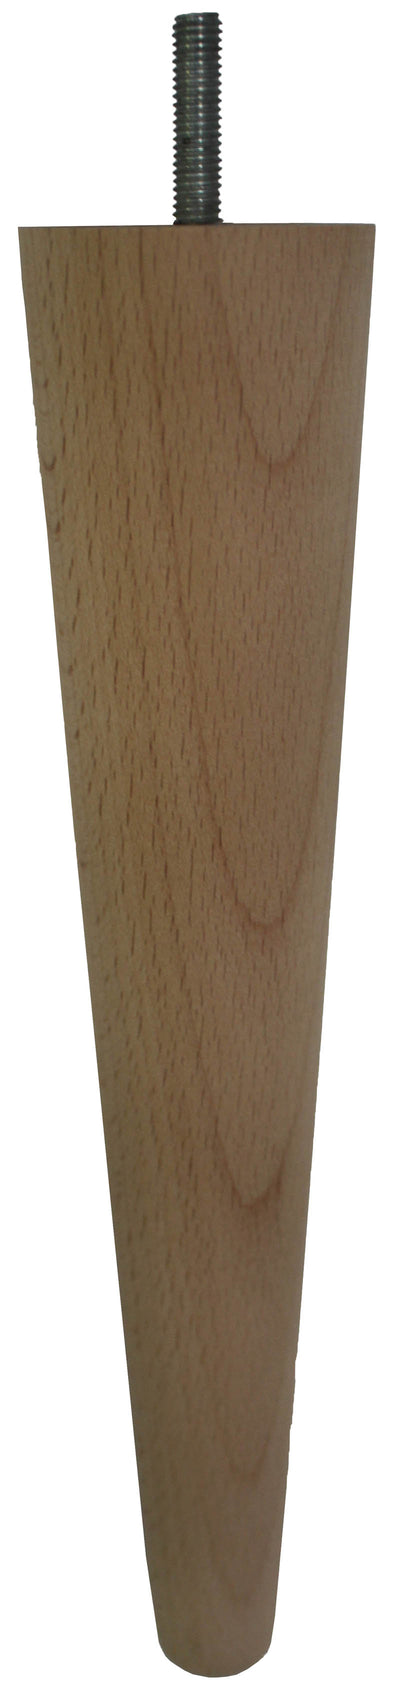 Kennedy Tall Wooden Furniture Legs